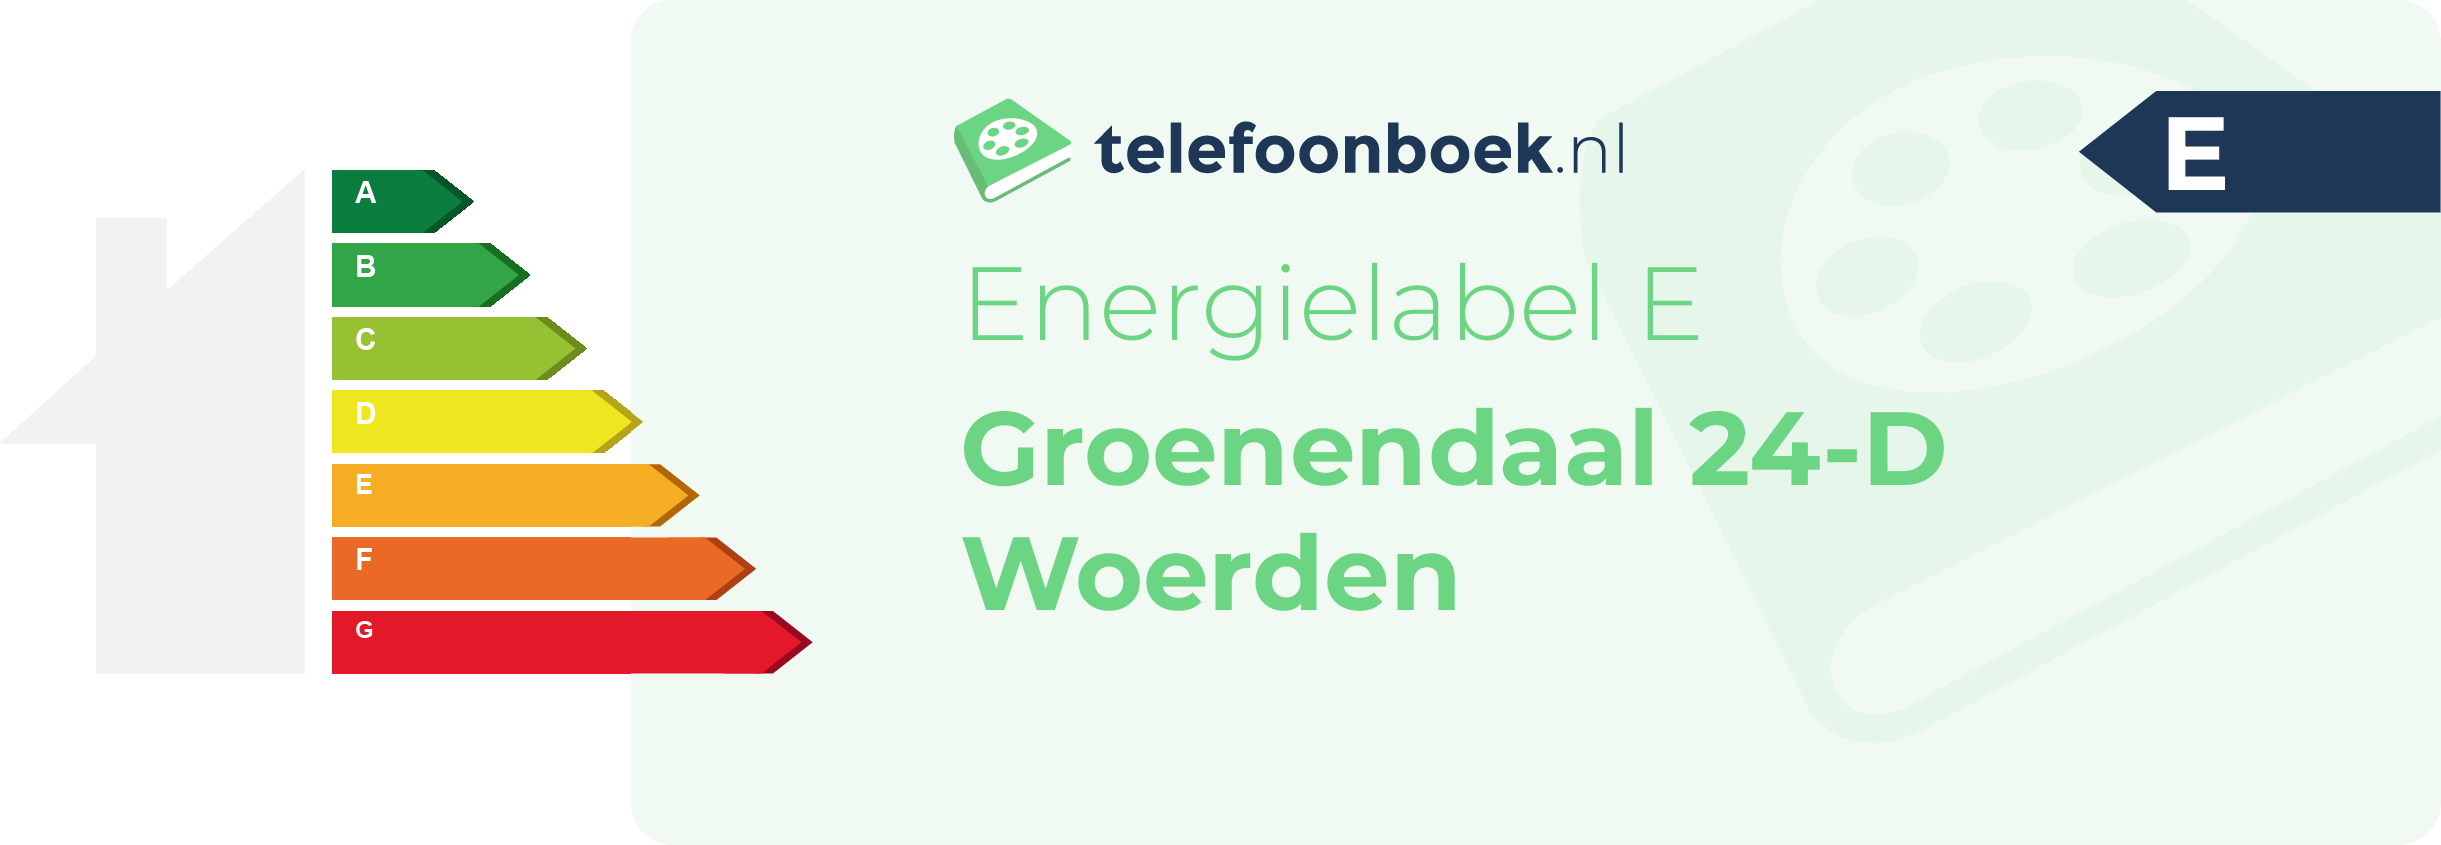 Energielabel Groenendaal 24-D Woerden